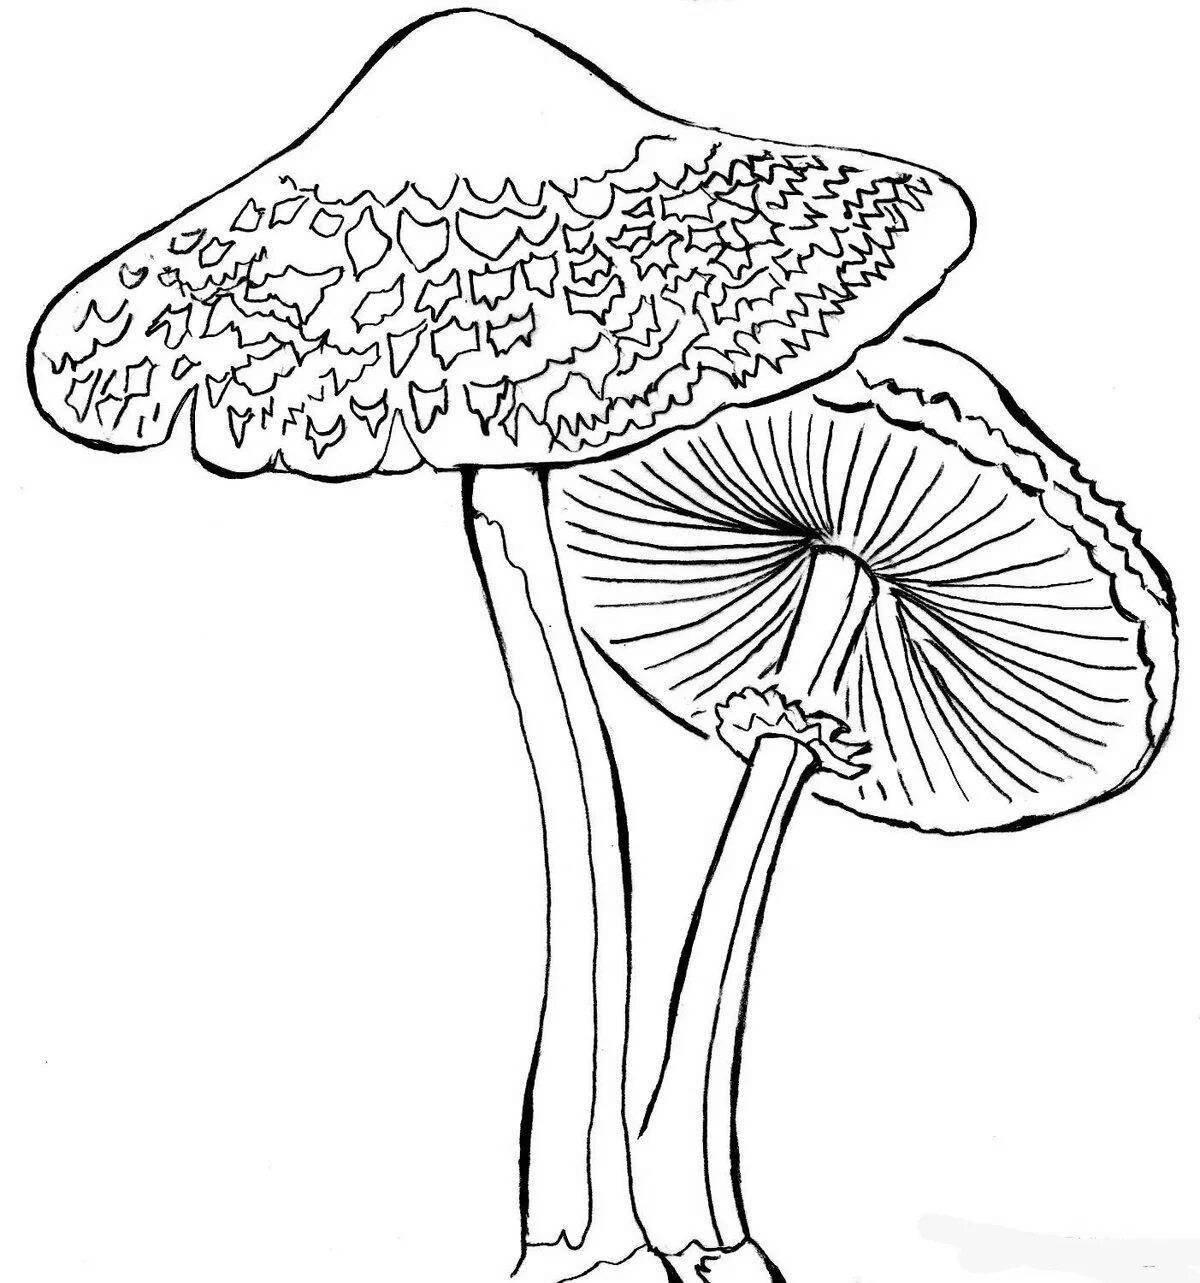 Dazzling toadstool mushrooms